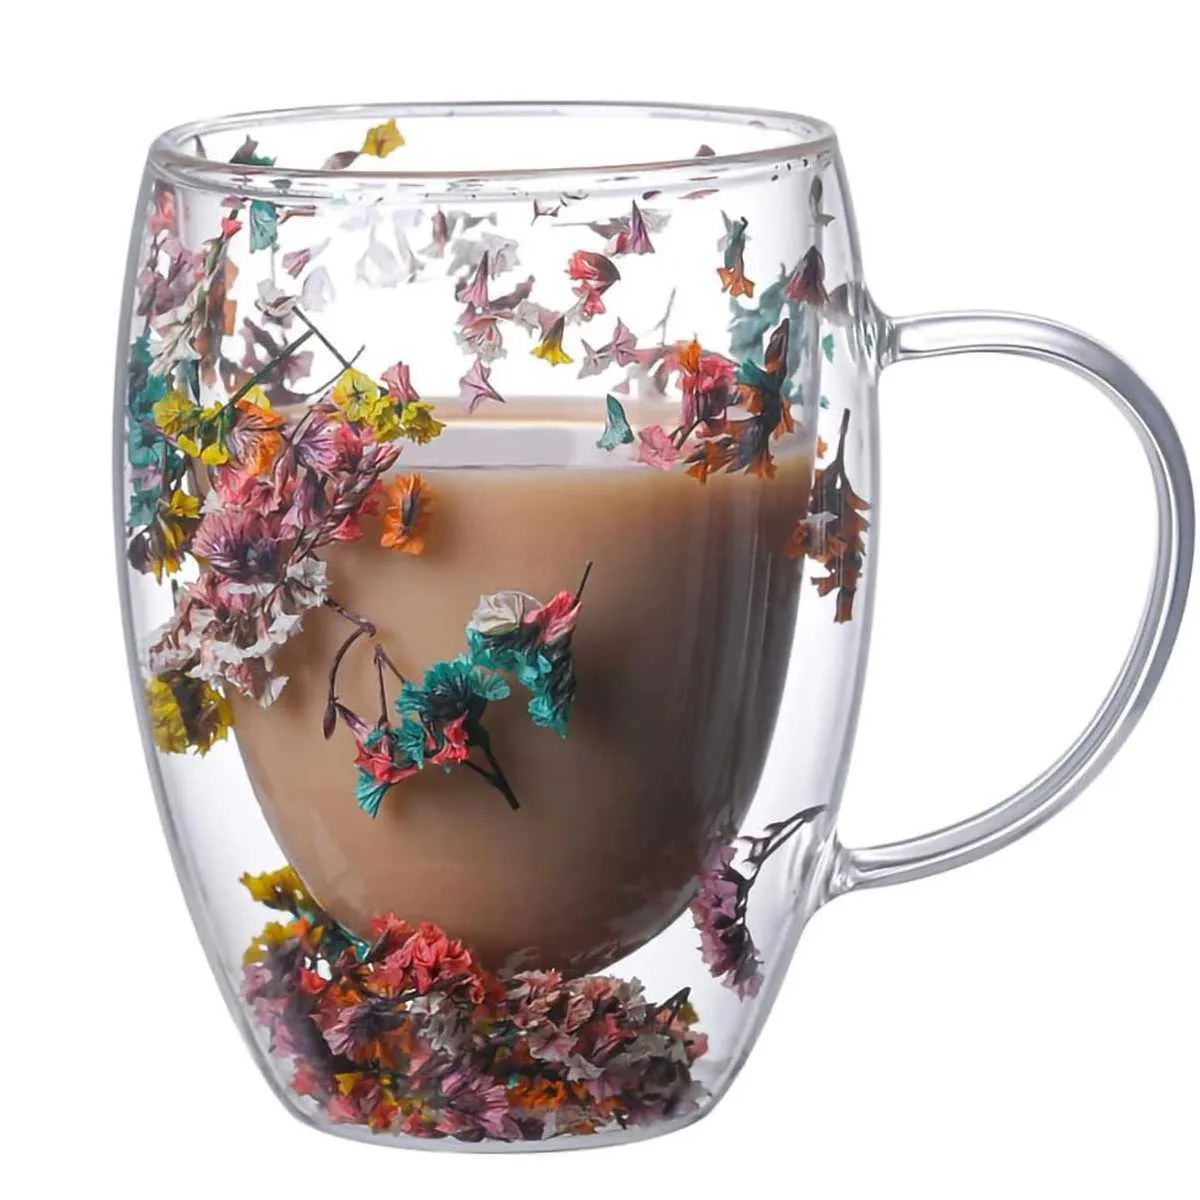 Gobelers 300 ml en verre de fleur tasse double mur à double mur sec